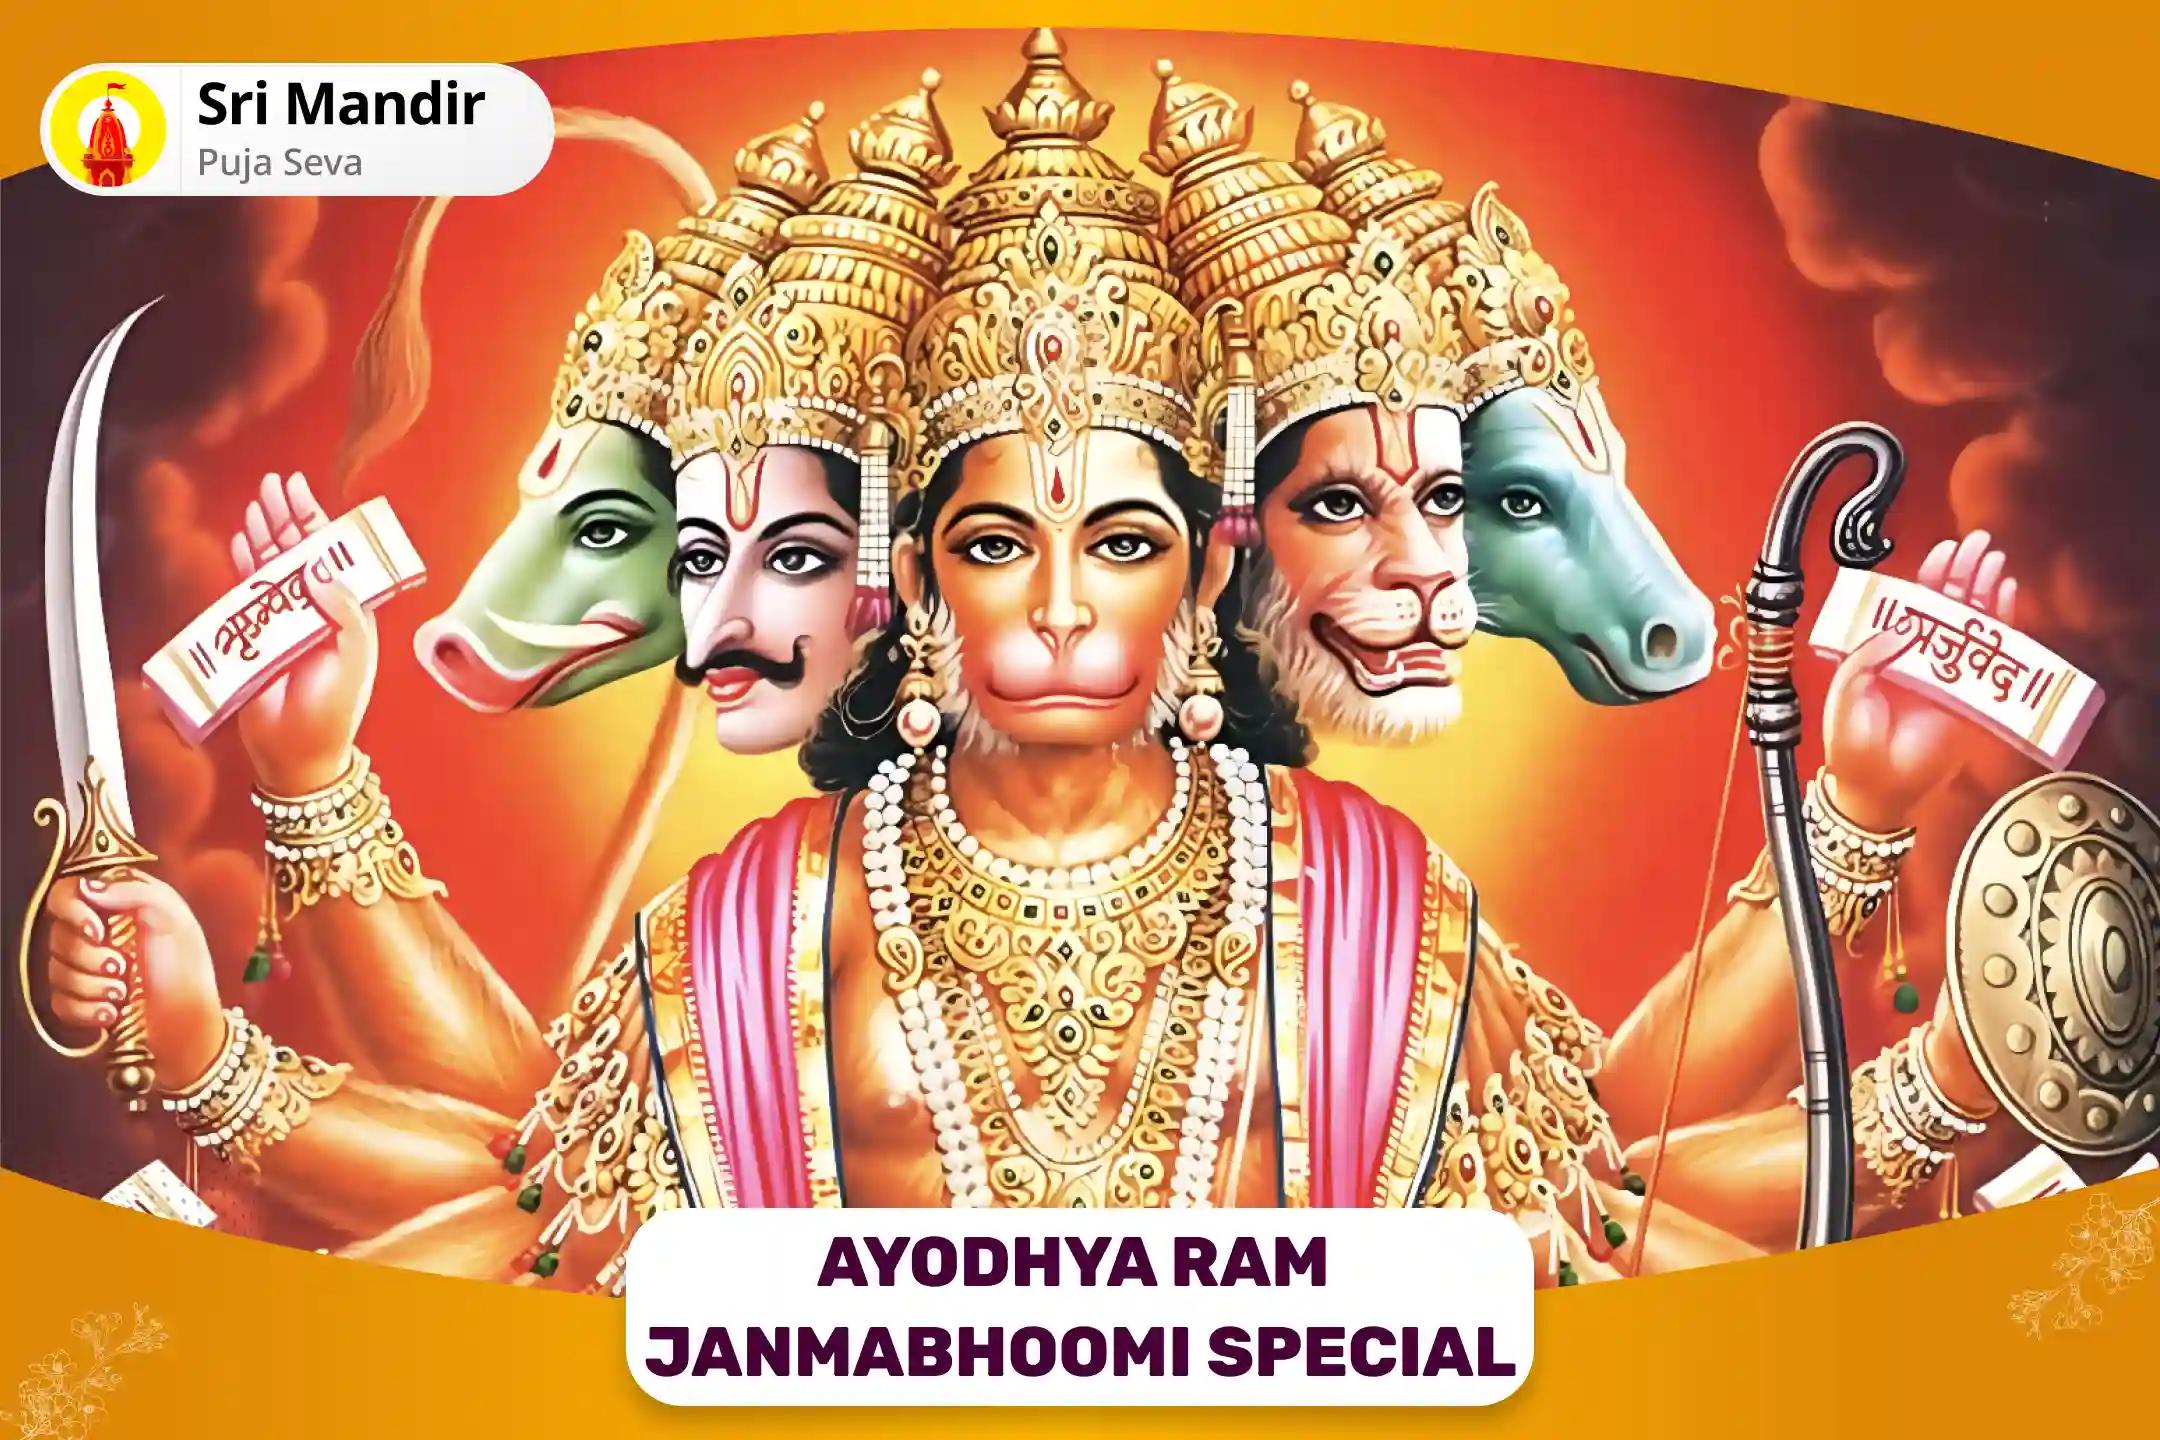 Ayodhya Ram Janmabhoomi Special Hanuman Bajrang Baan and Hanuman Shatrunjay Path for Courage and Victory over Enemies